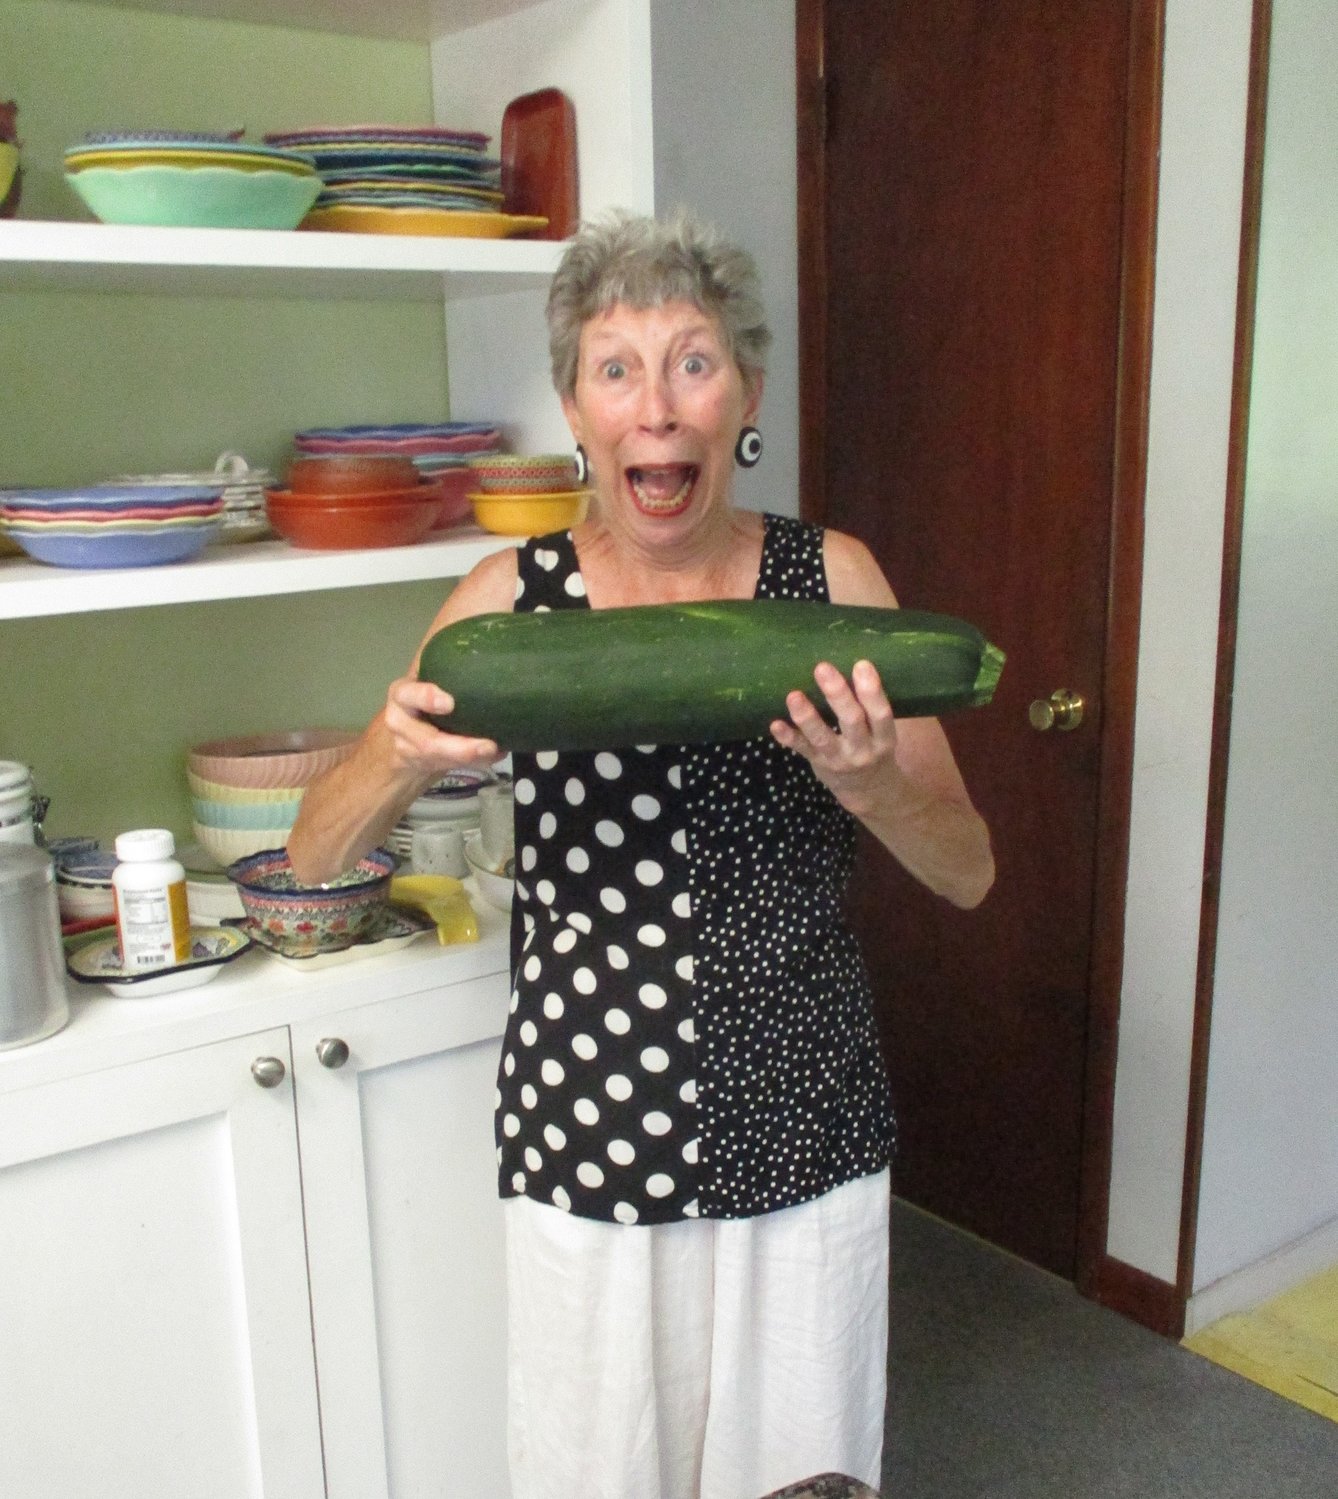 A monster zucchini.